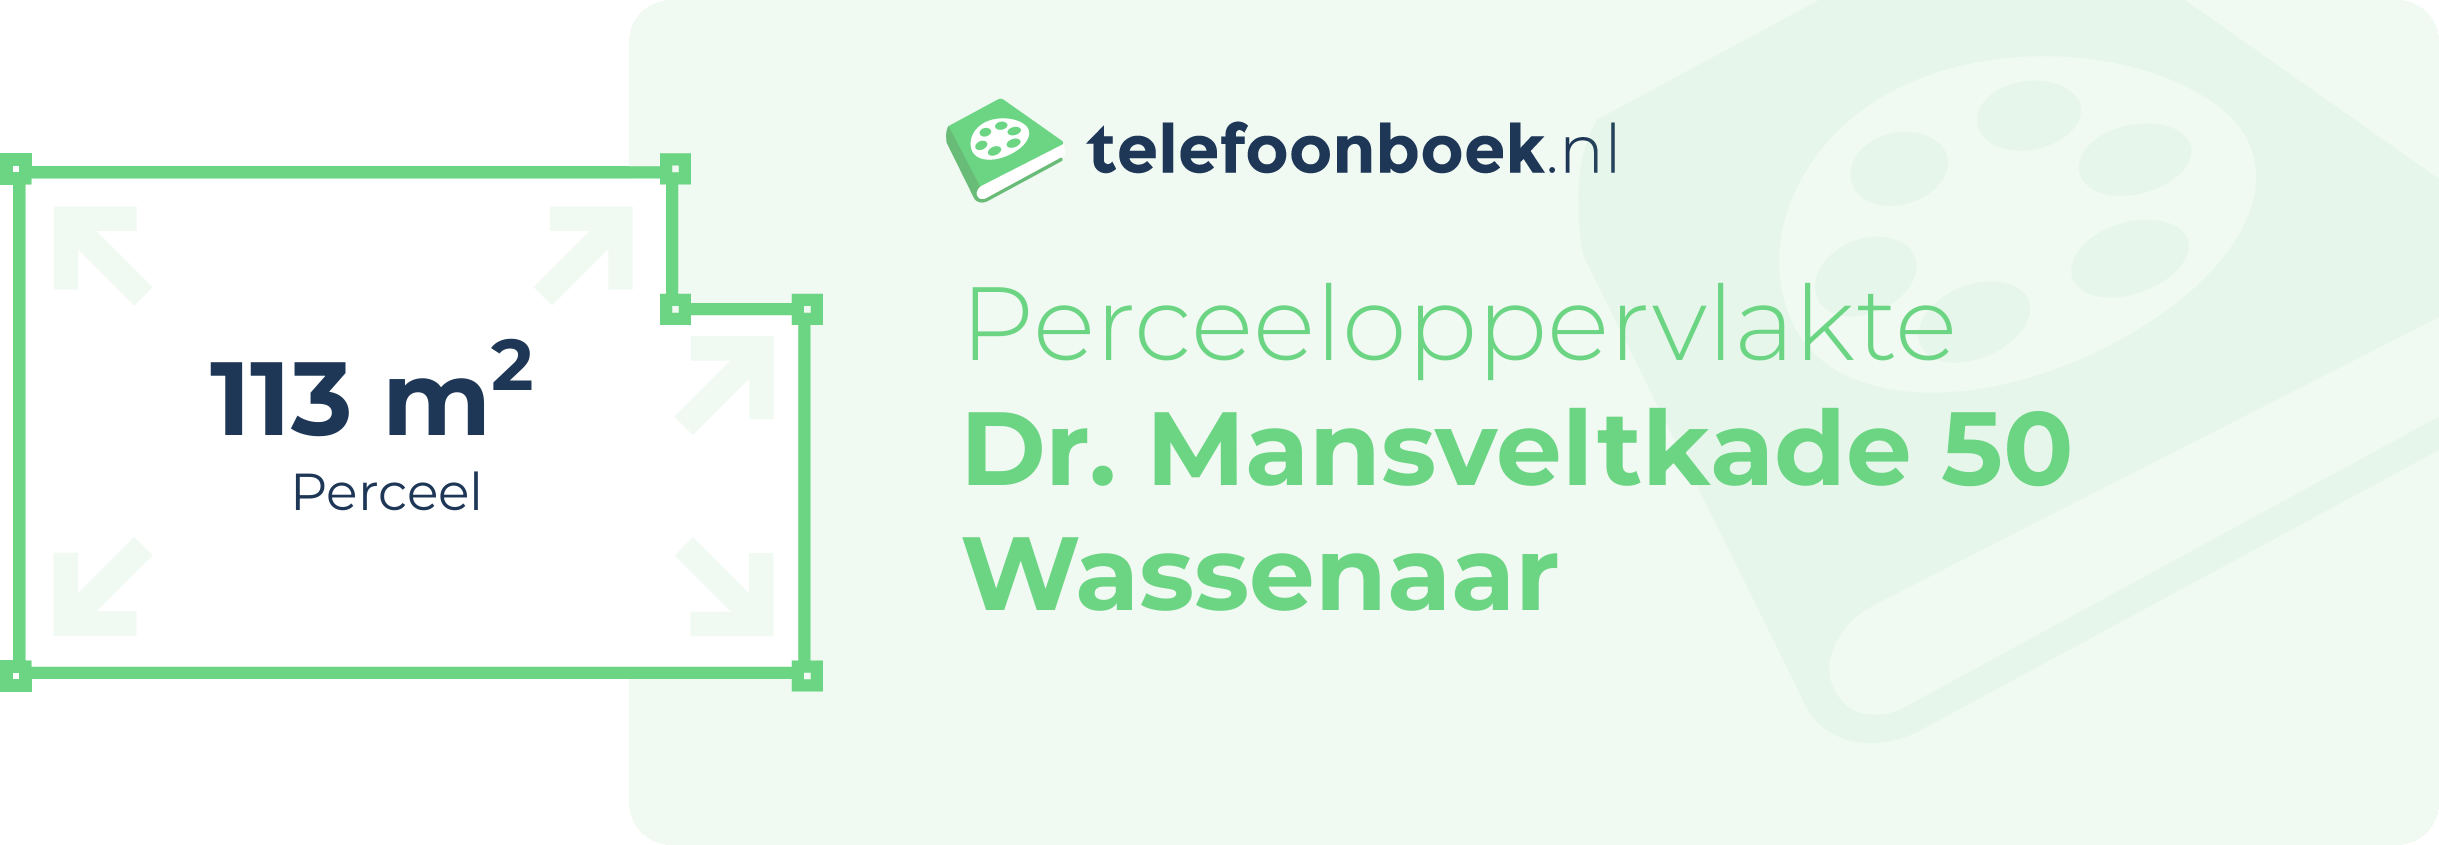 Perceeloppervlakte Dr. Mansveltkade 50 Wassenaar